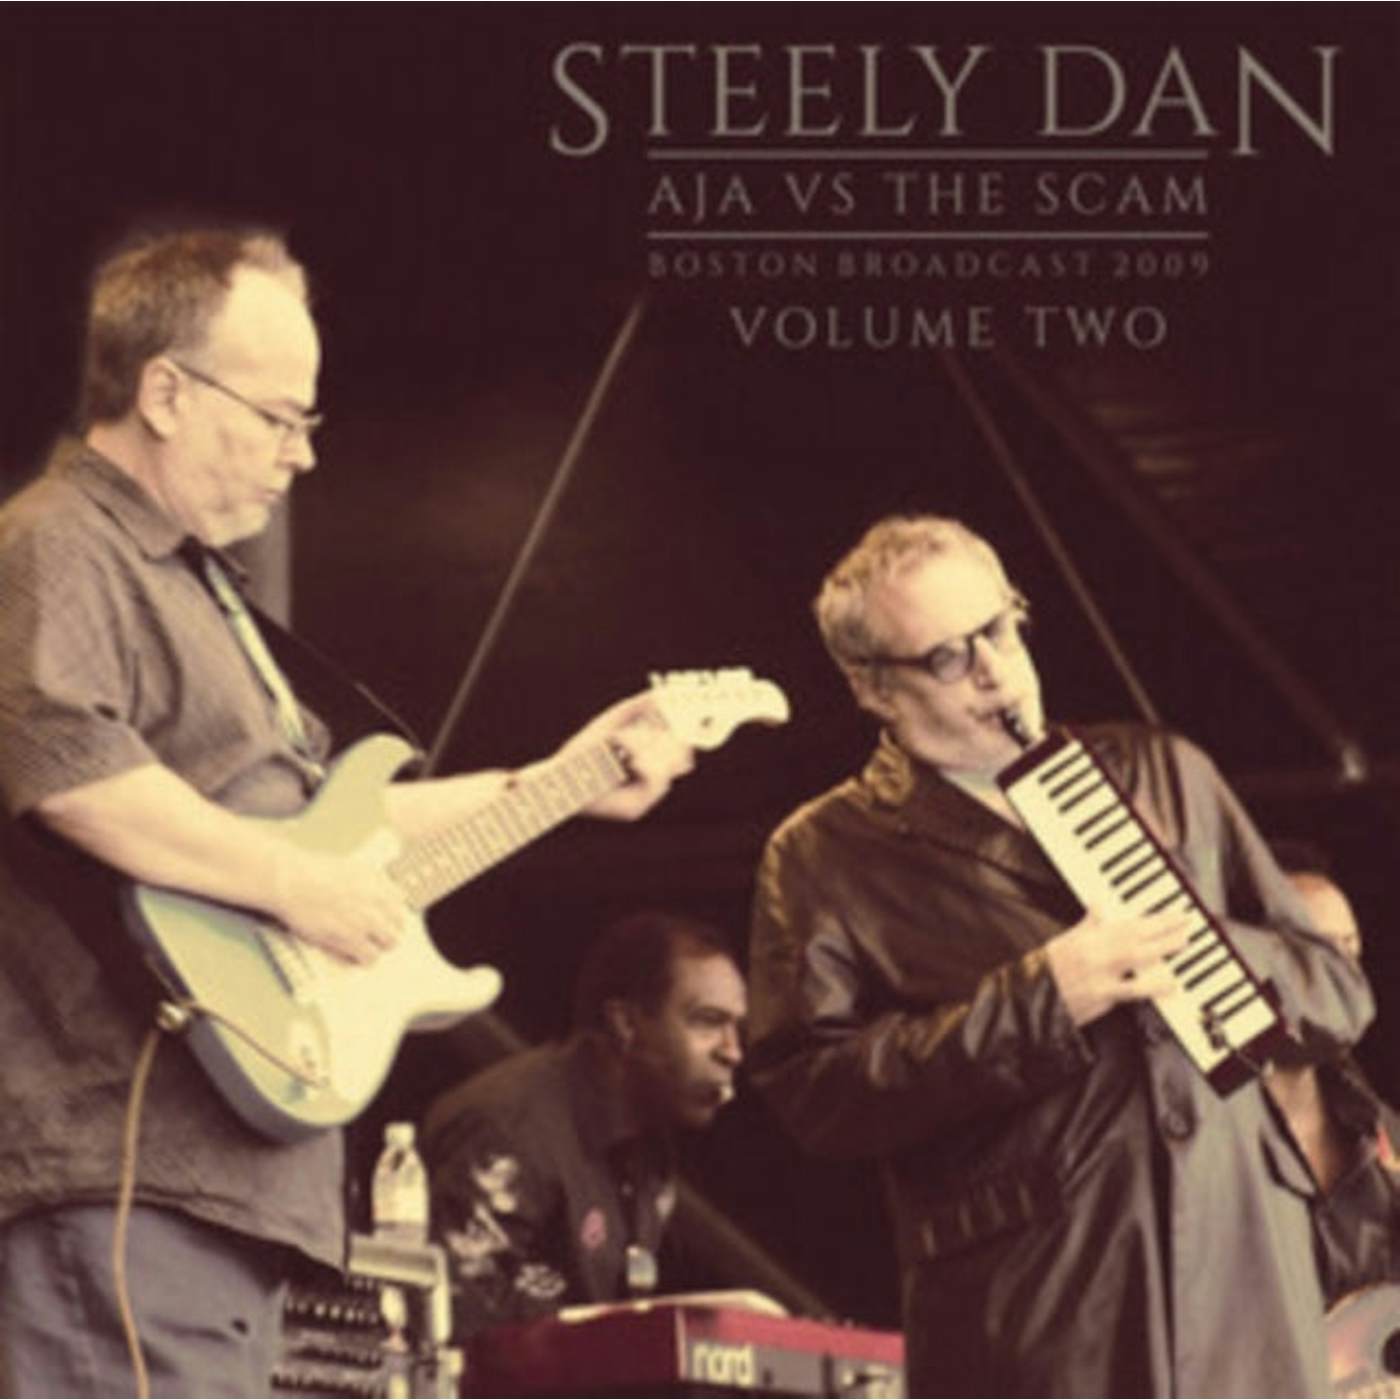 Steely Dan LP Vinyl Record - Aja Vs The Scam Vol. 2